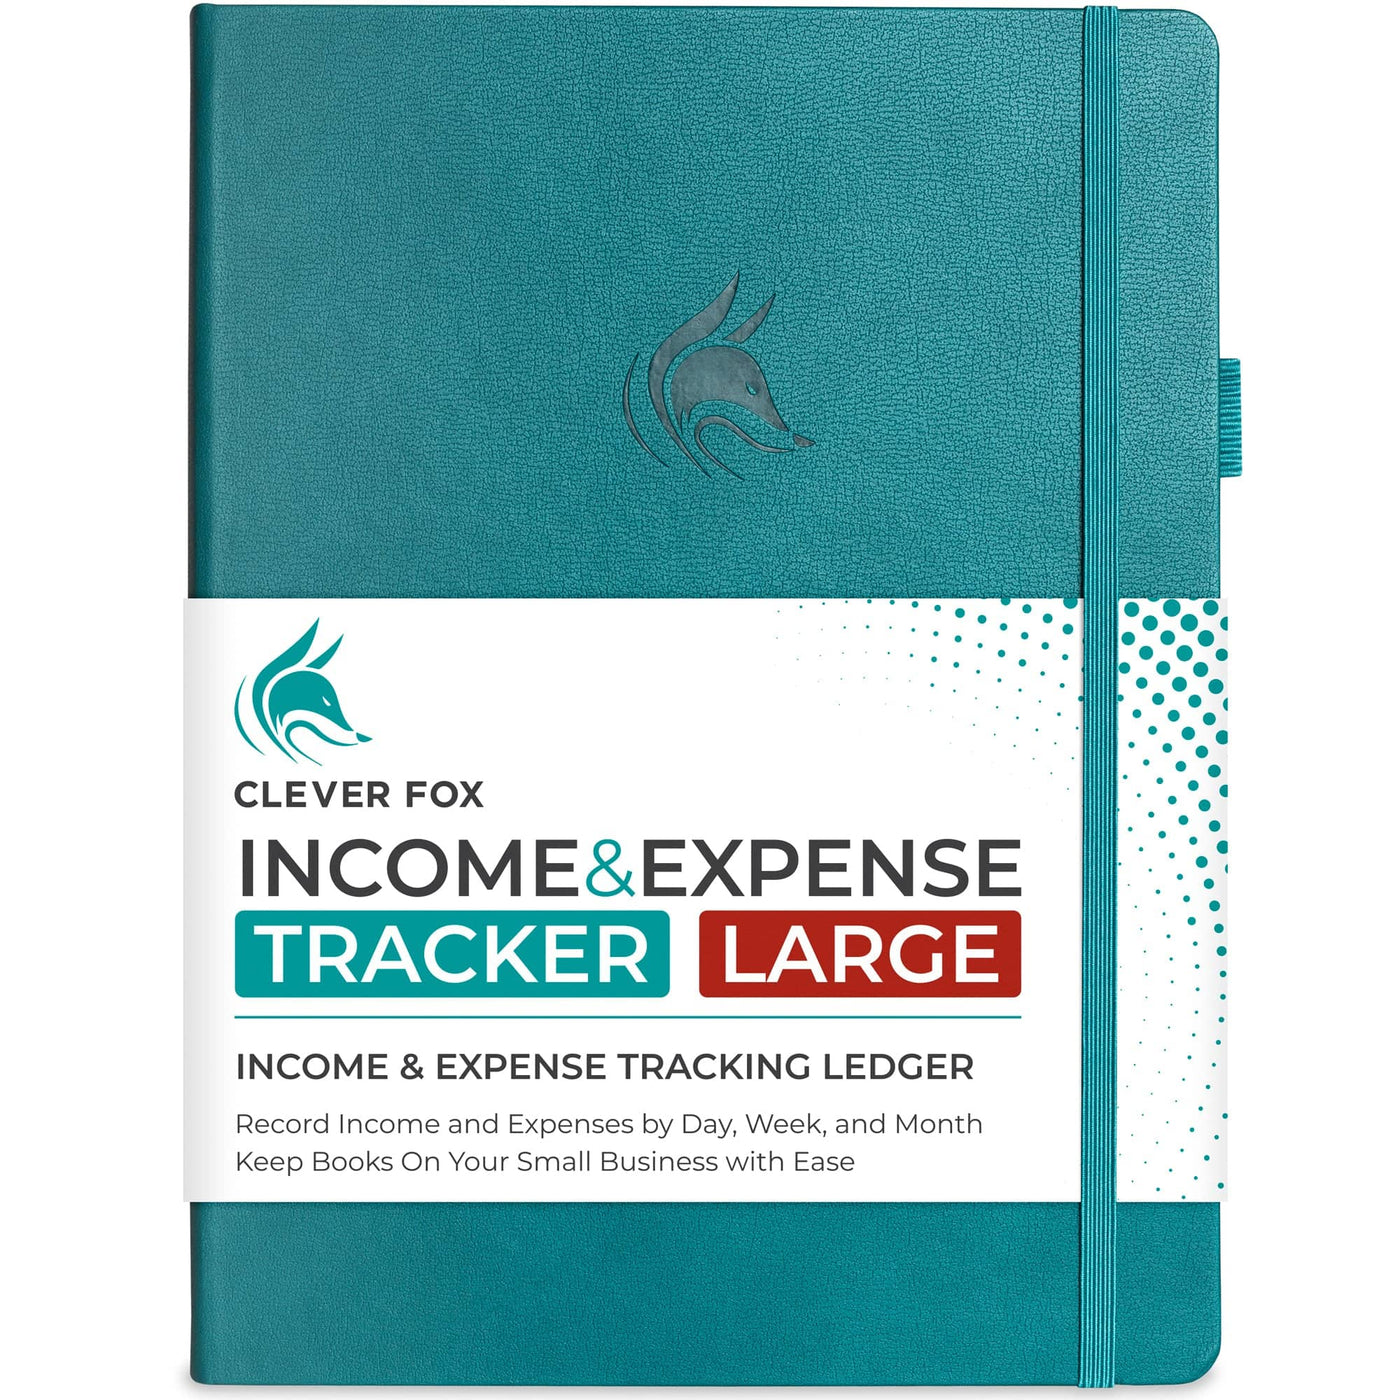 Income & Expense Tracker